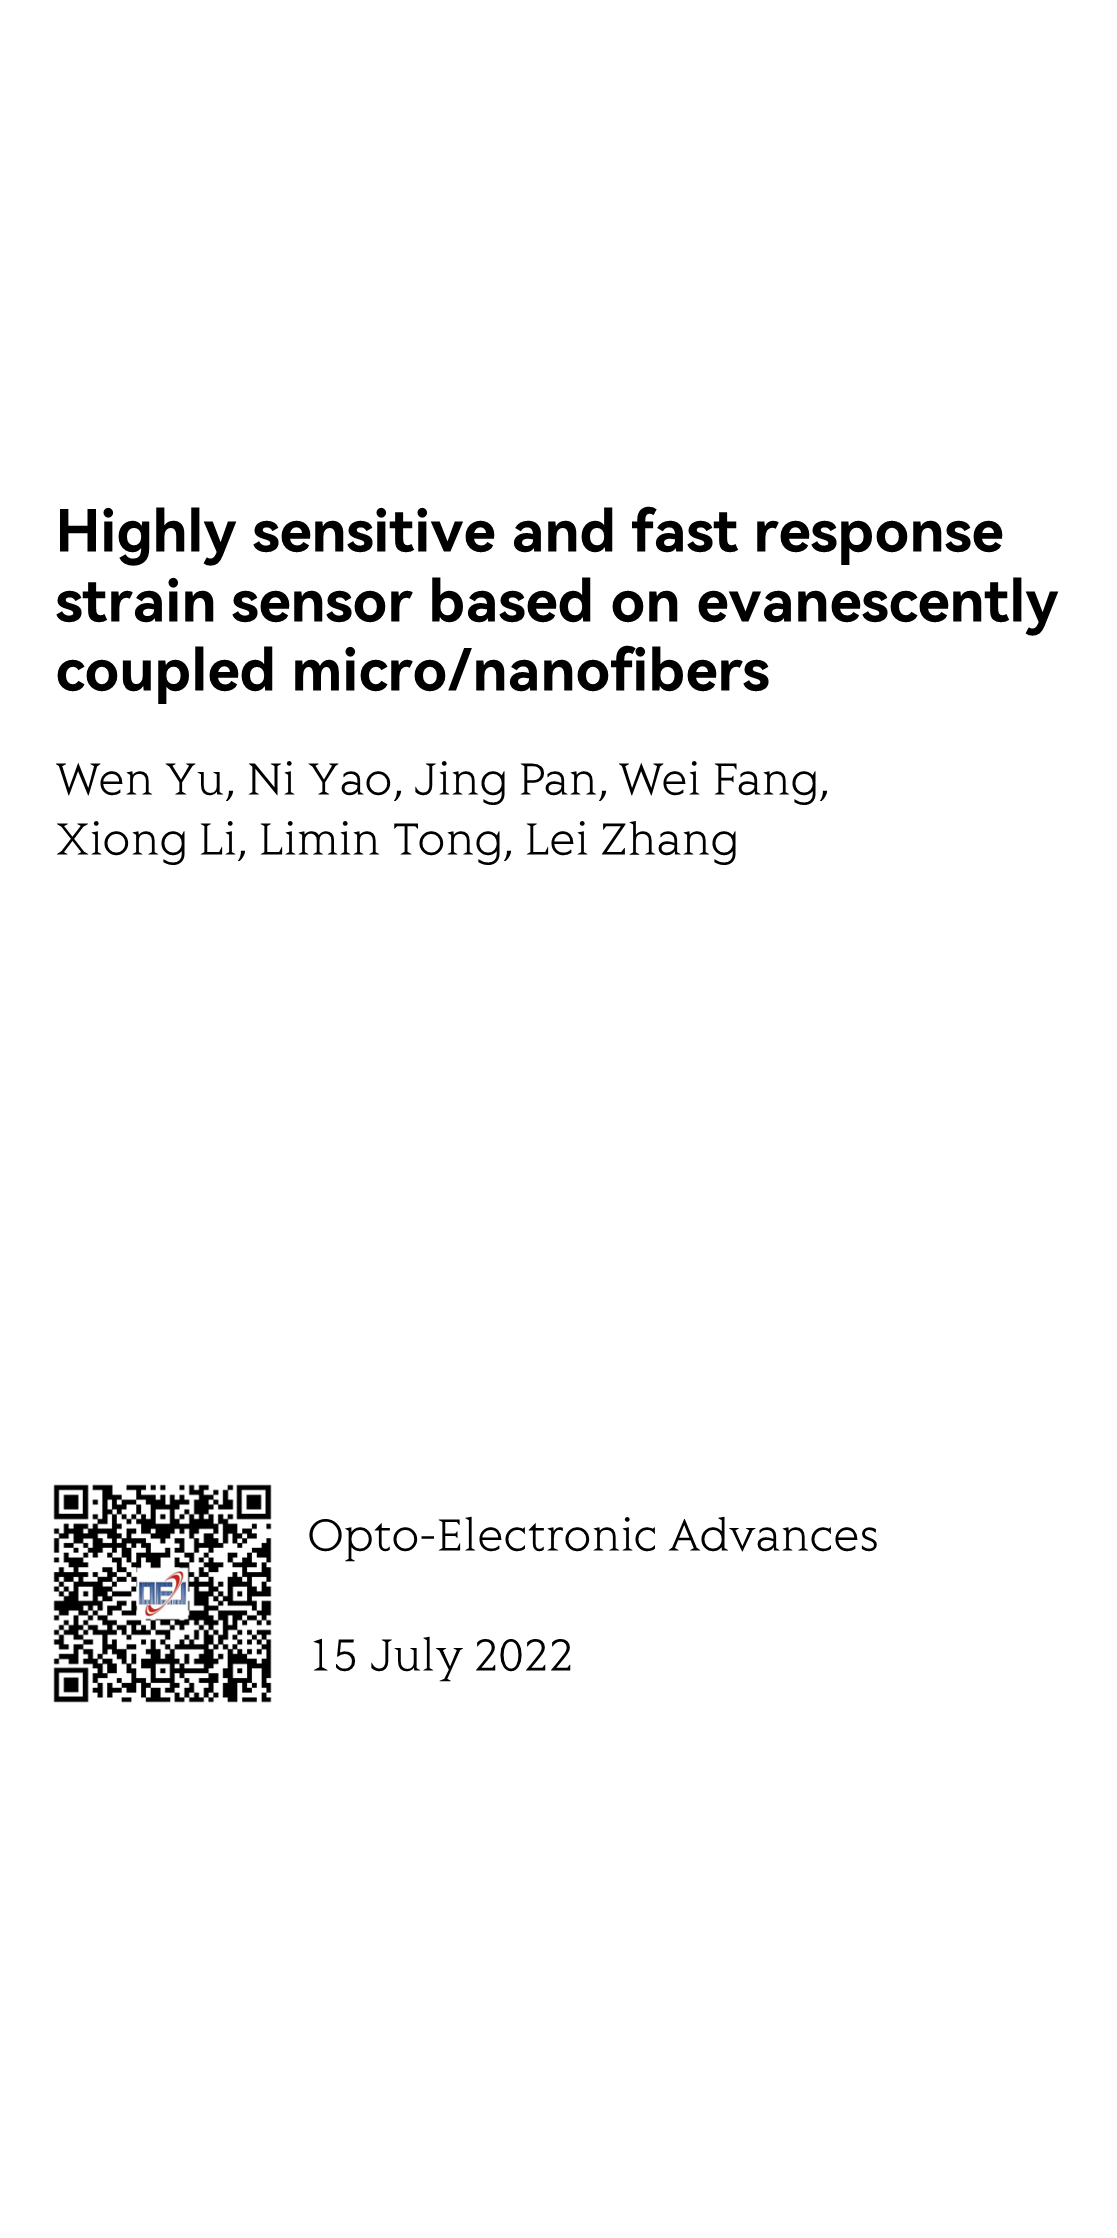 Highly sensitive and fast response strain sensor based on evanescently coupled micro/nanofibers_1